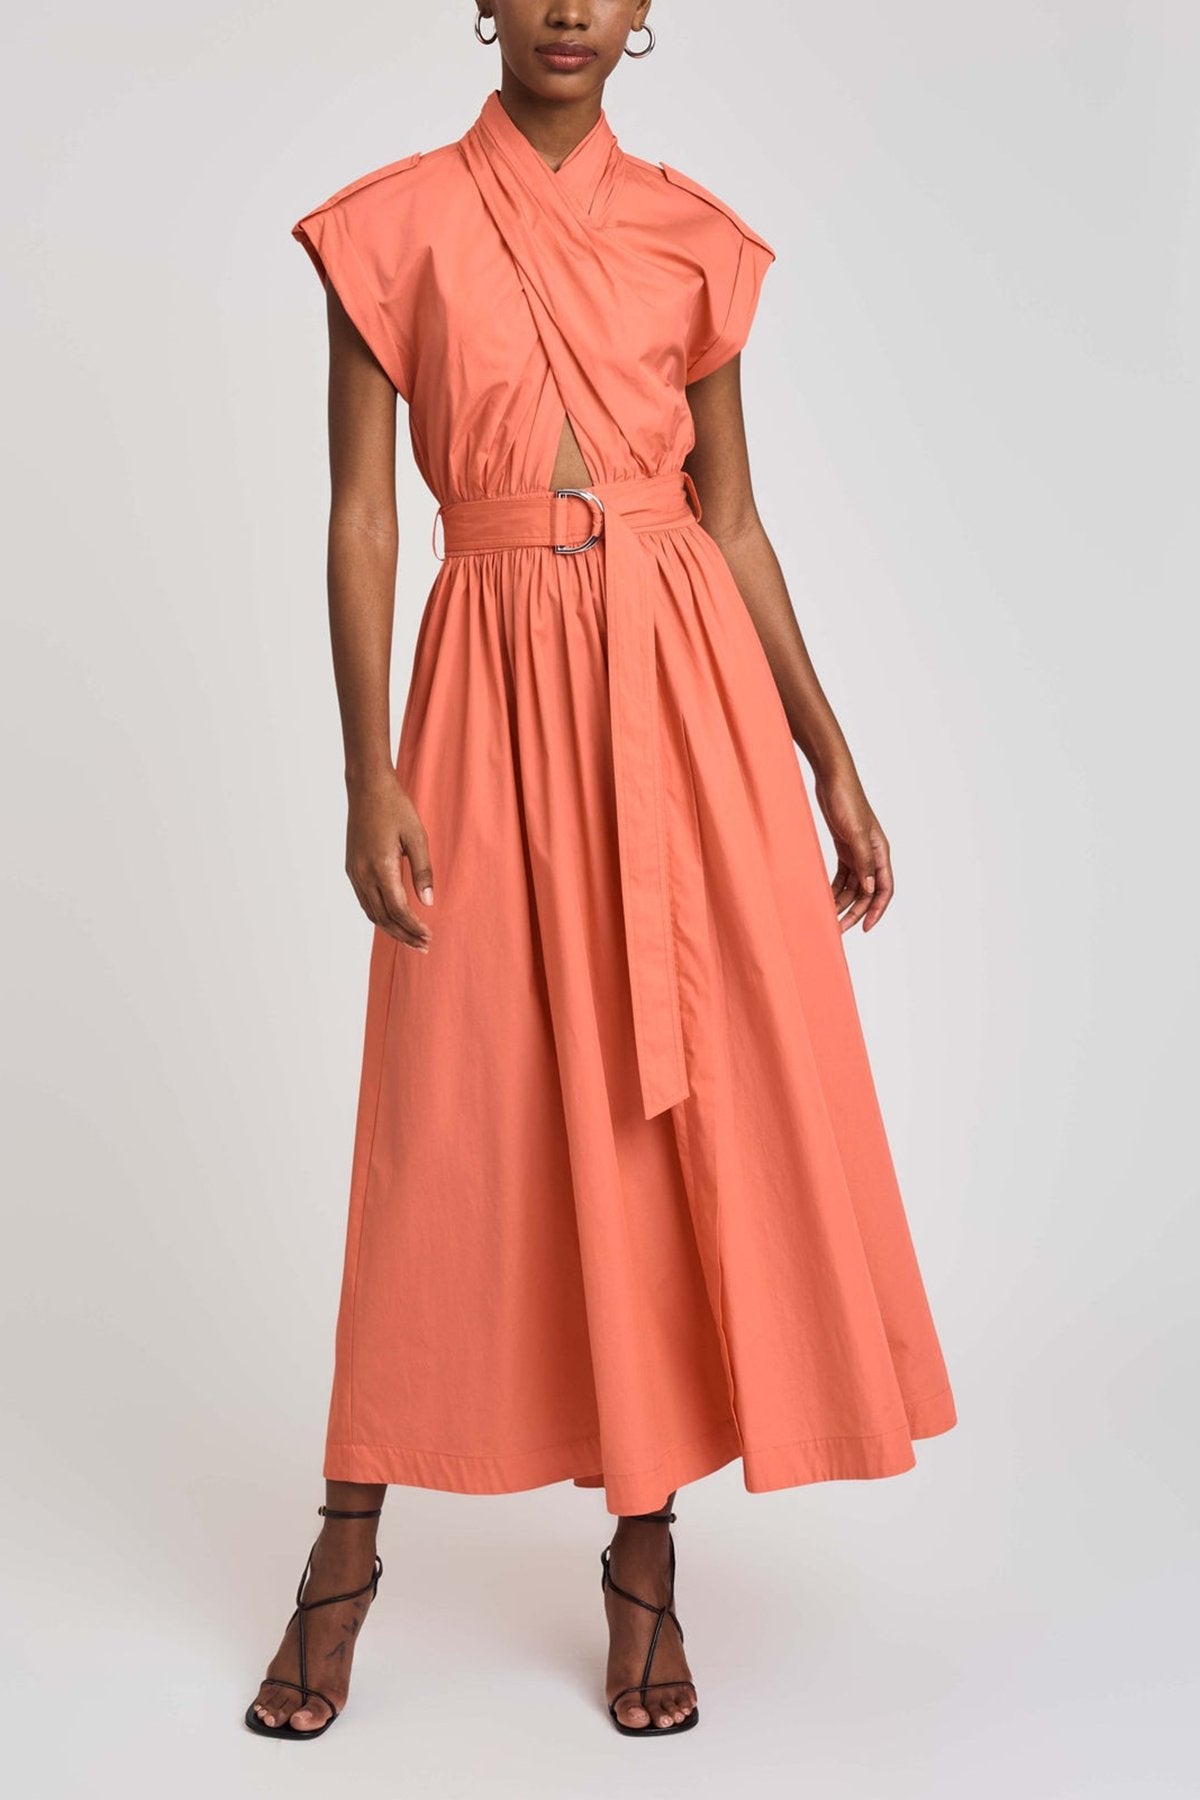 Celeste Wrap Dress in Coral - shop-olivia.com